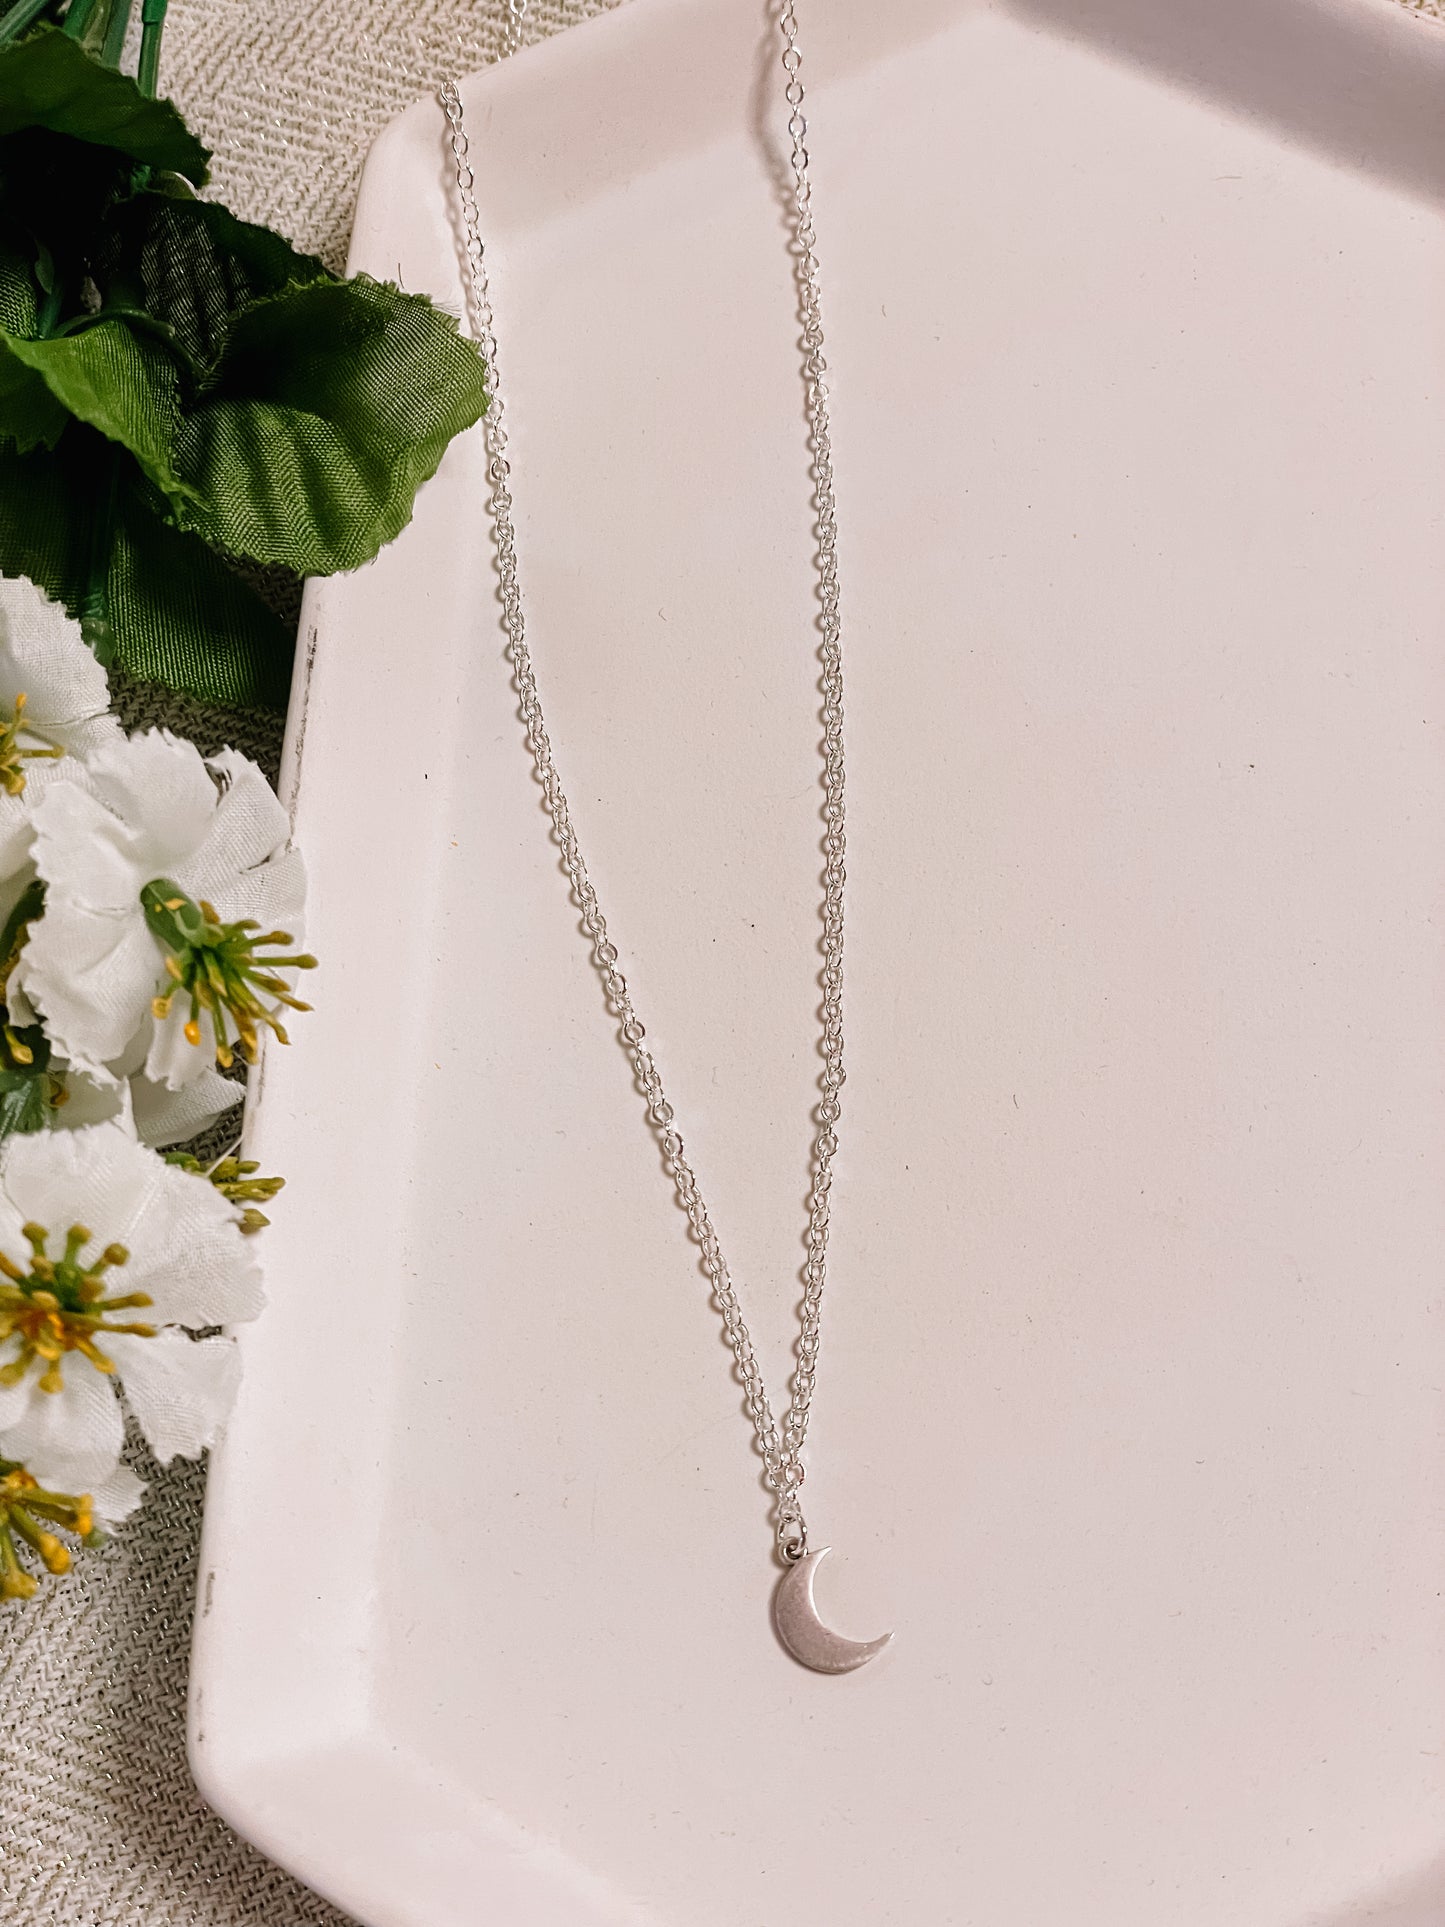 Little moon charm necklace